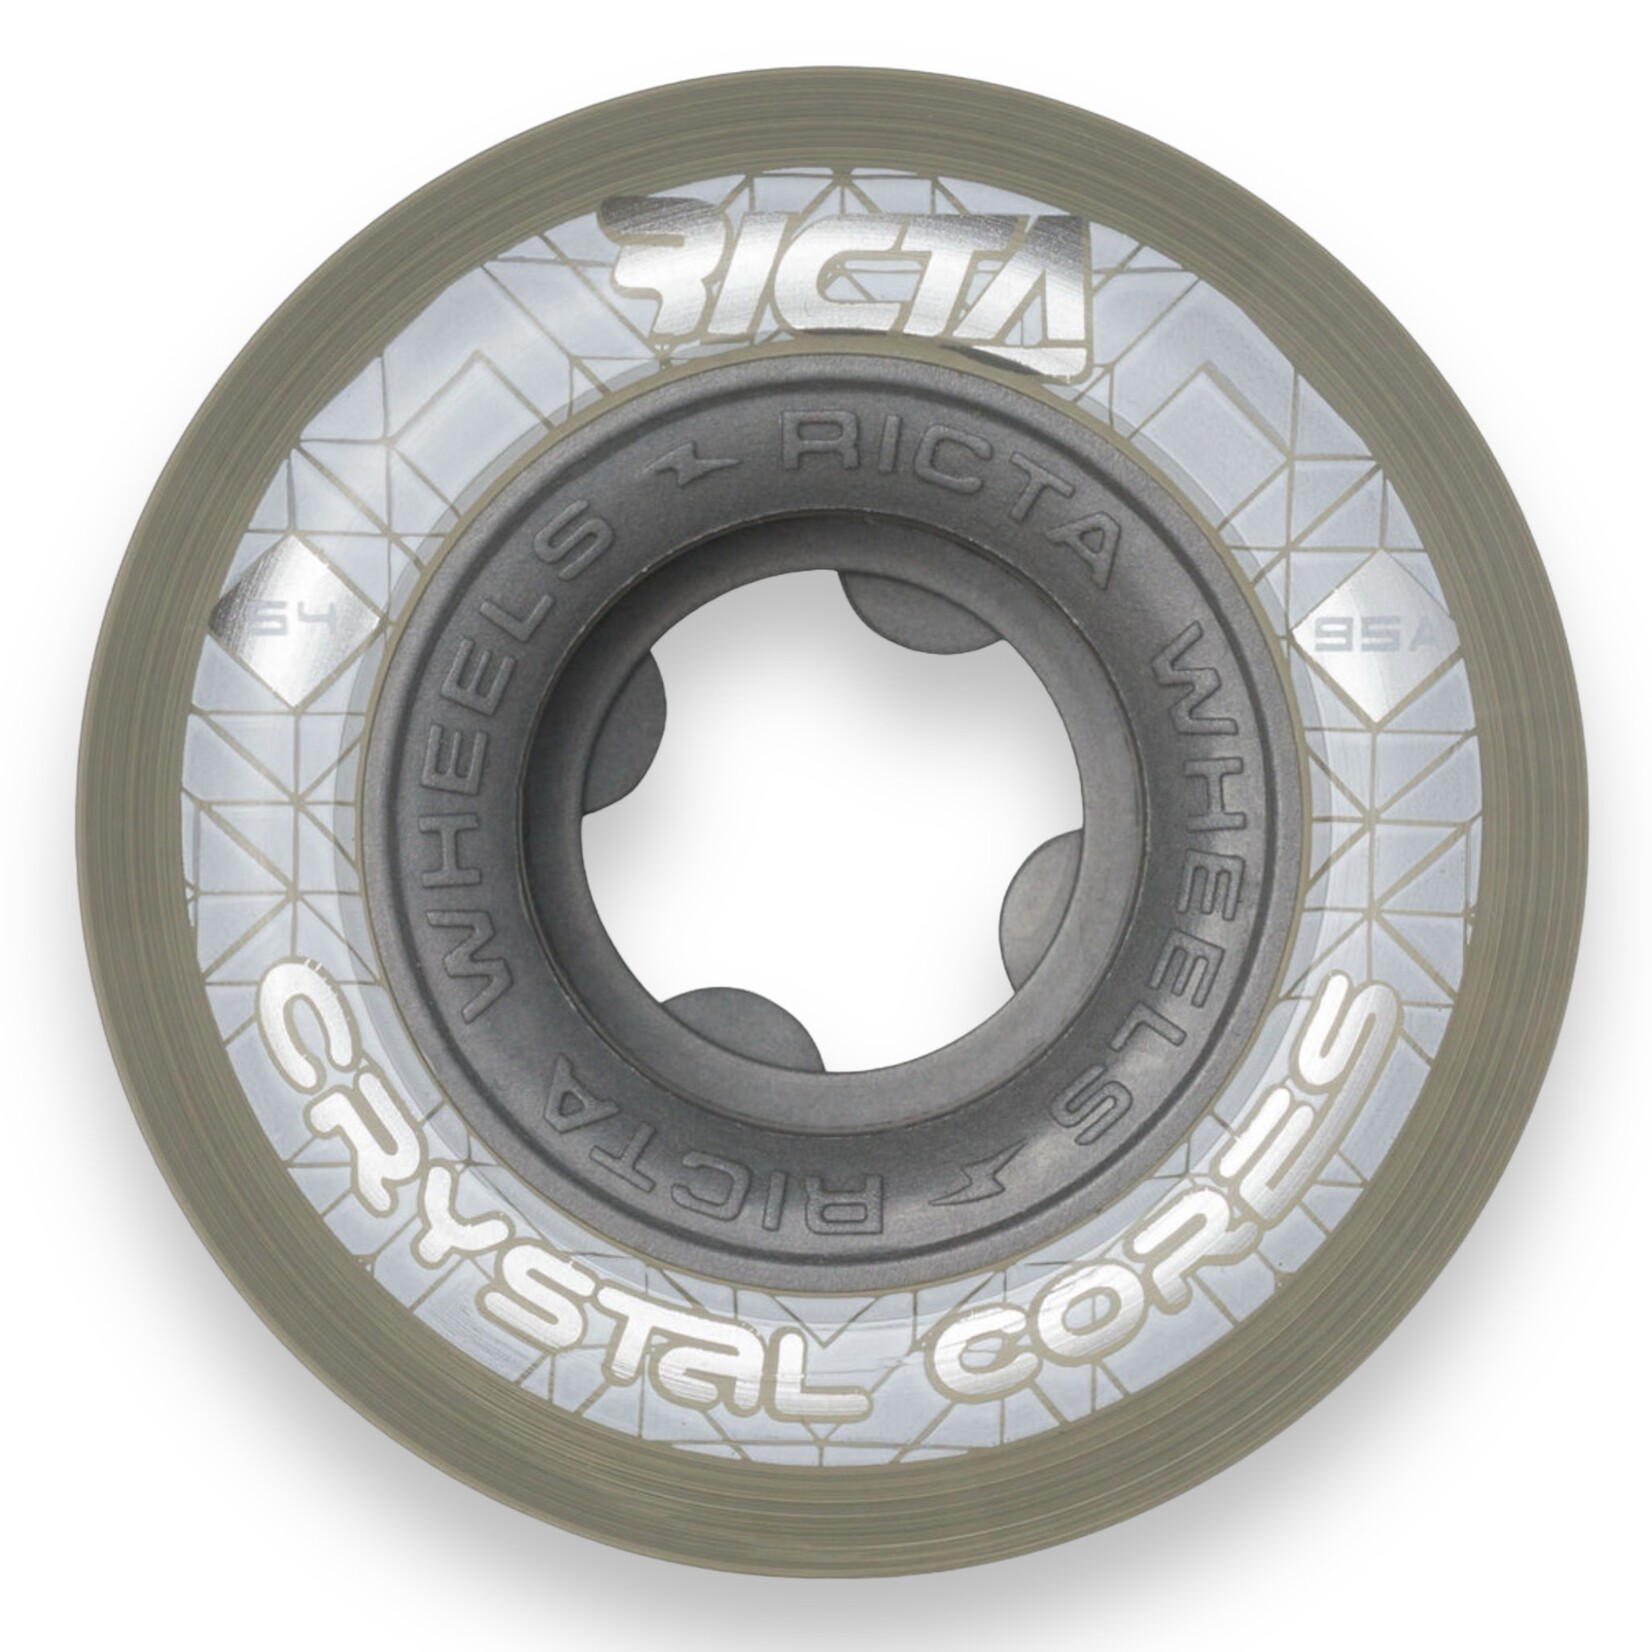 Ricta Wheels Ricta Crystal Cores 95a Wheels 54mm